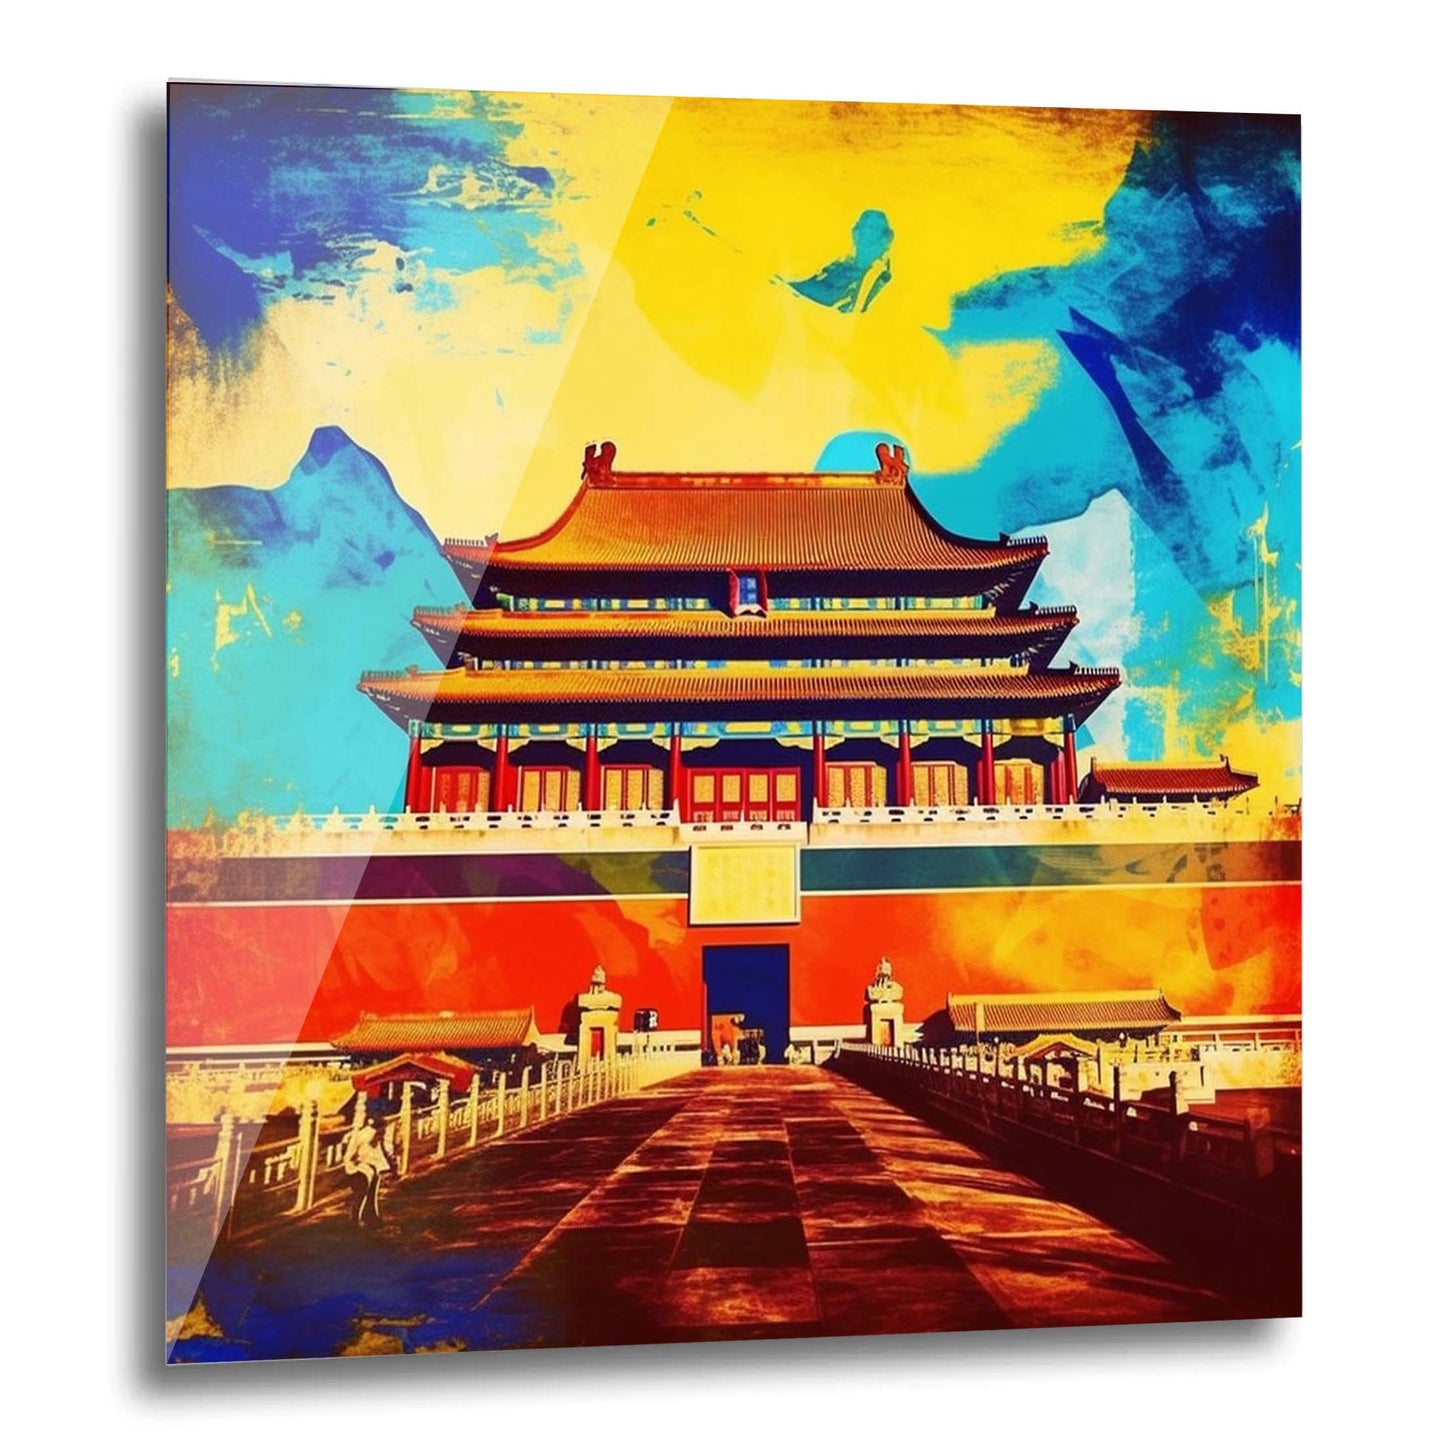 Pékin Forbidden City - peinture murale dans le style pop art